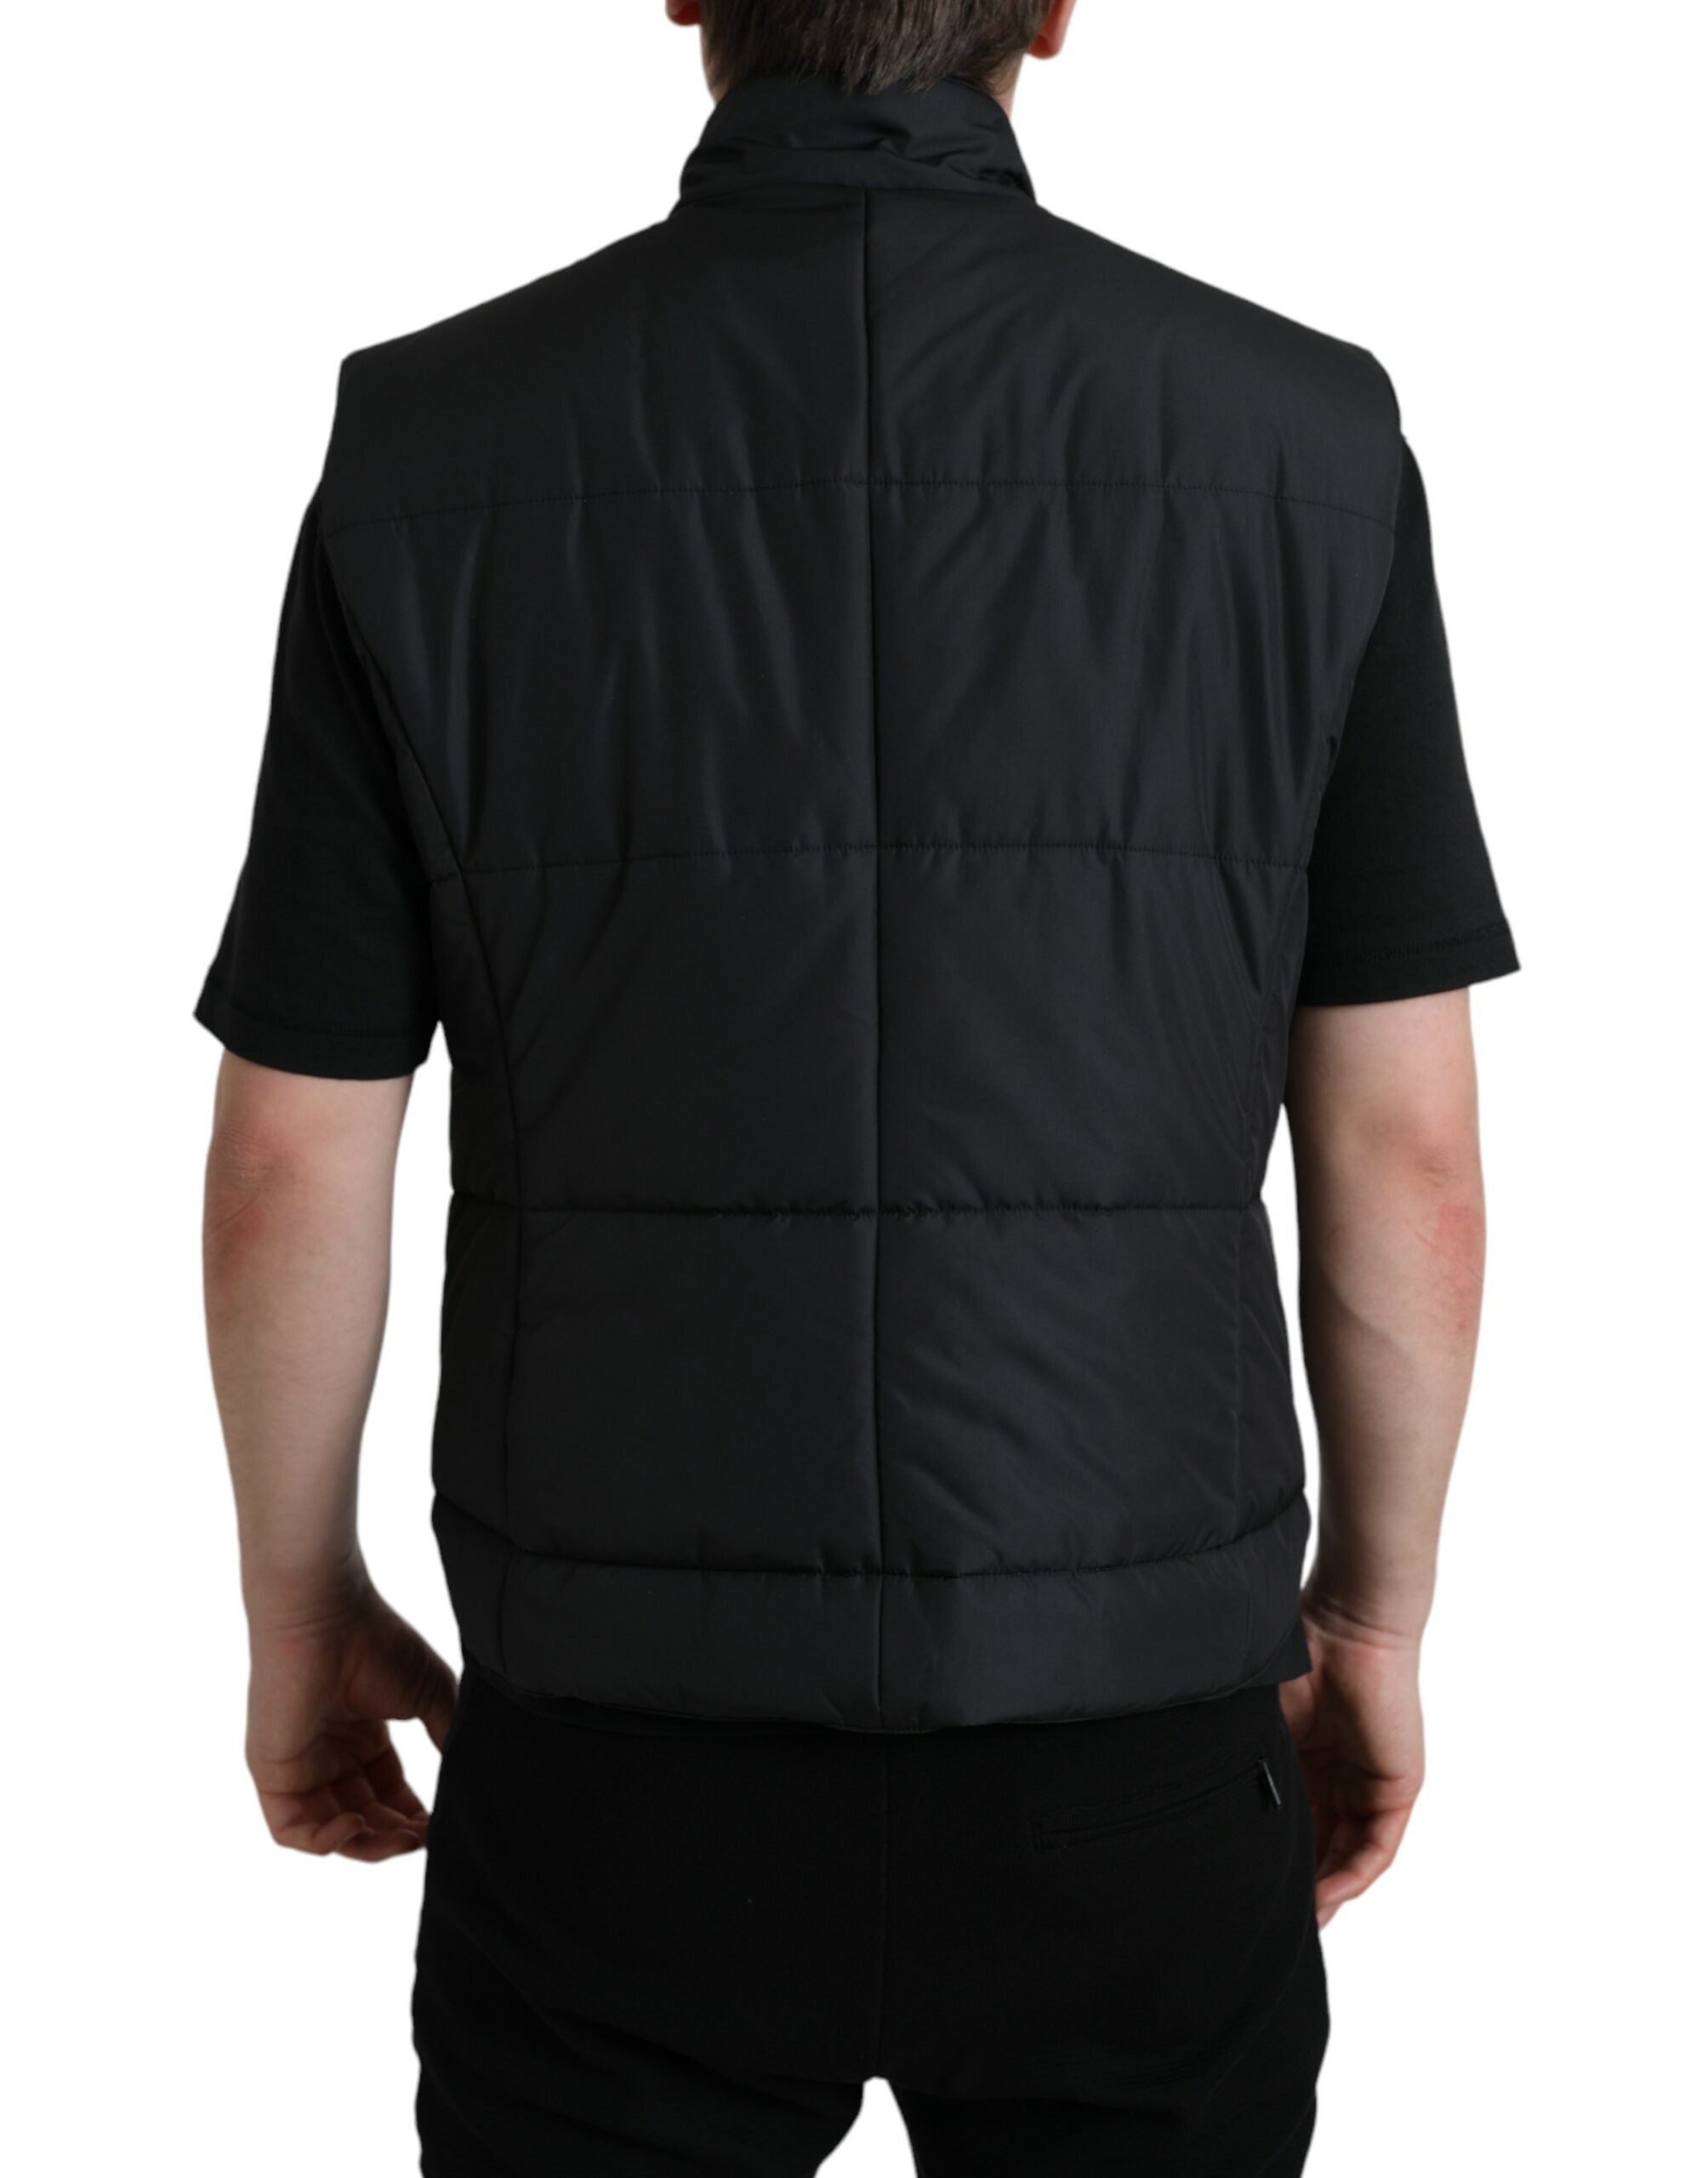 Dolce & Gabbana Sleek Black High-Neck Vest Jacket